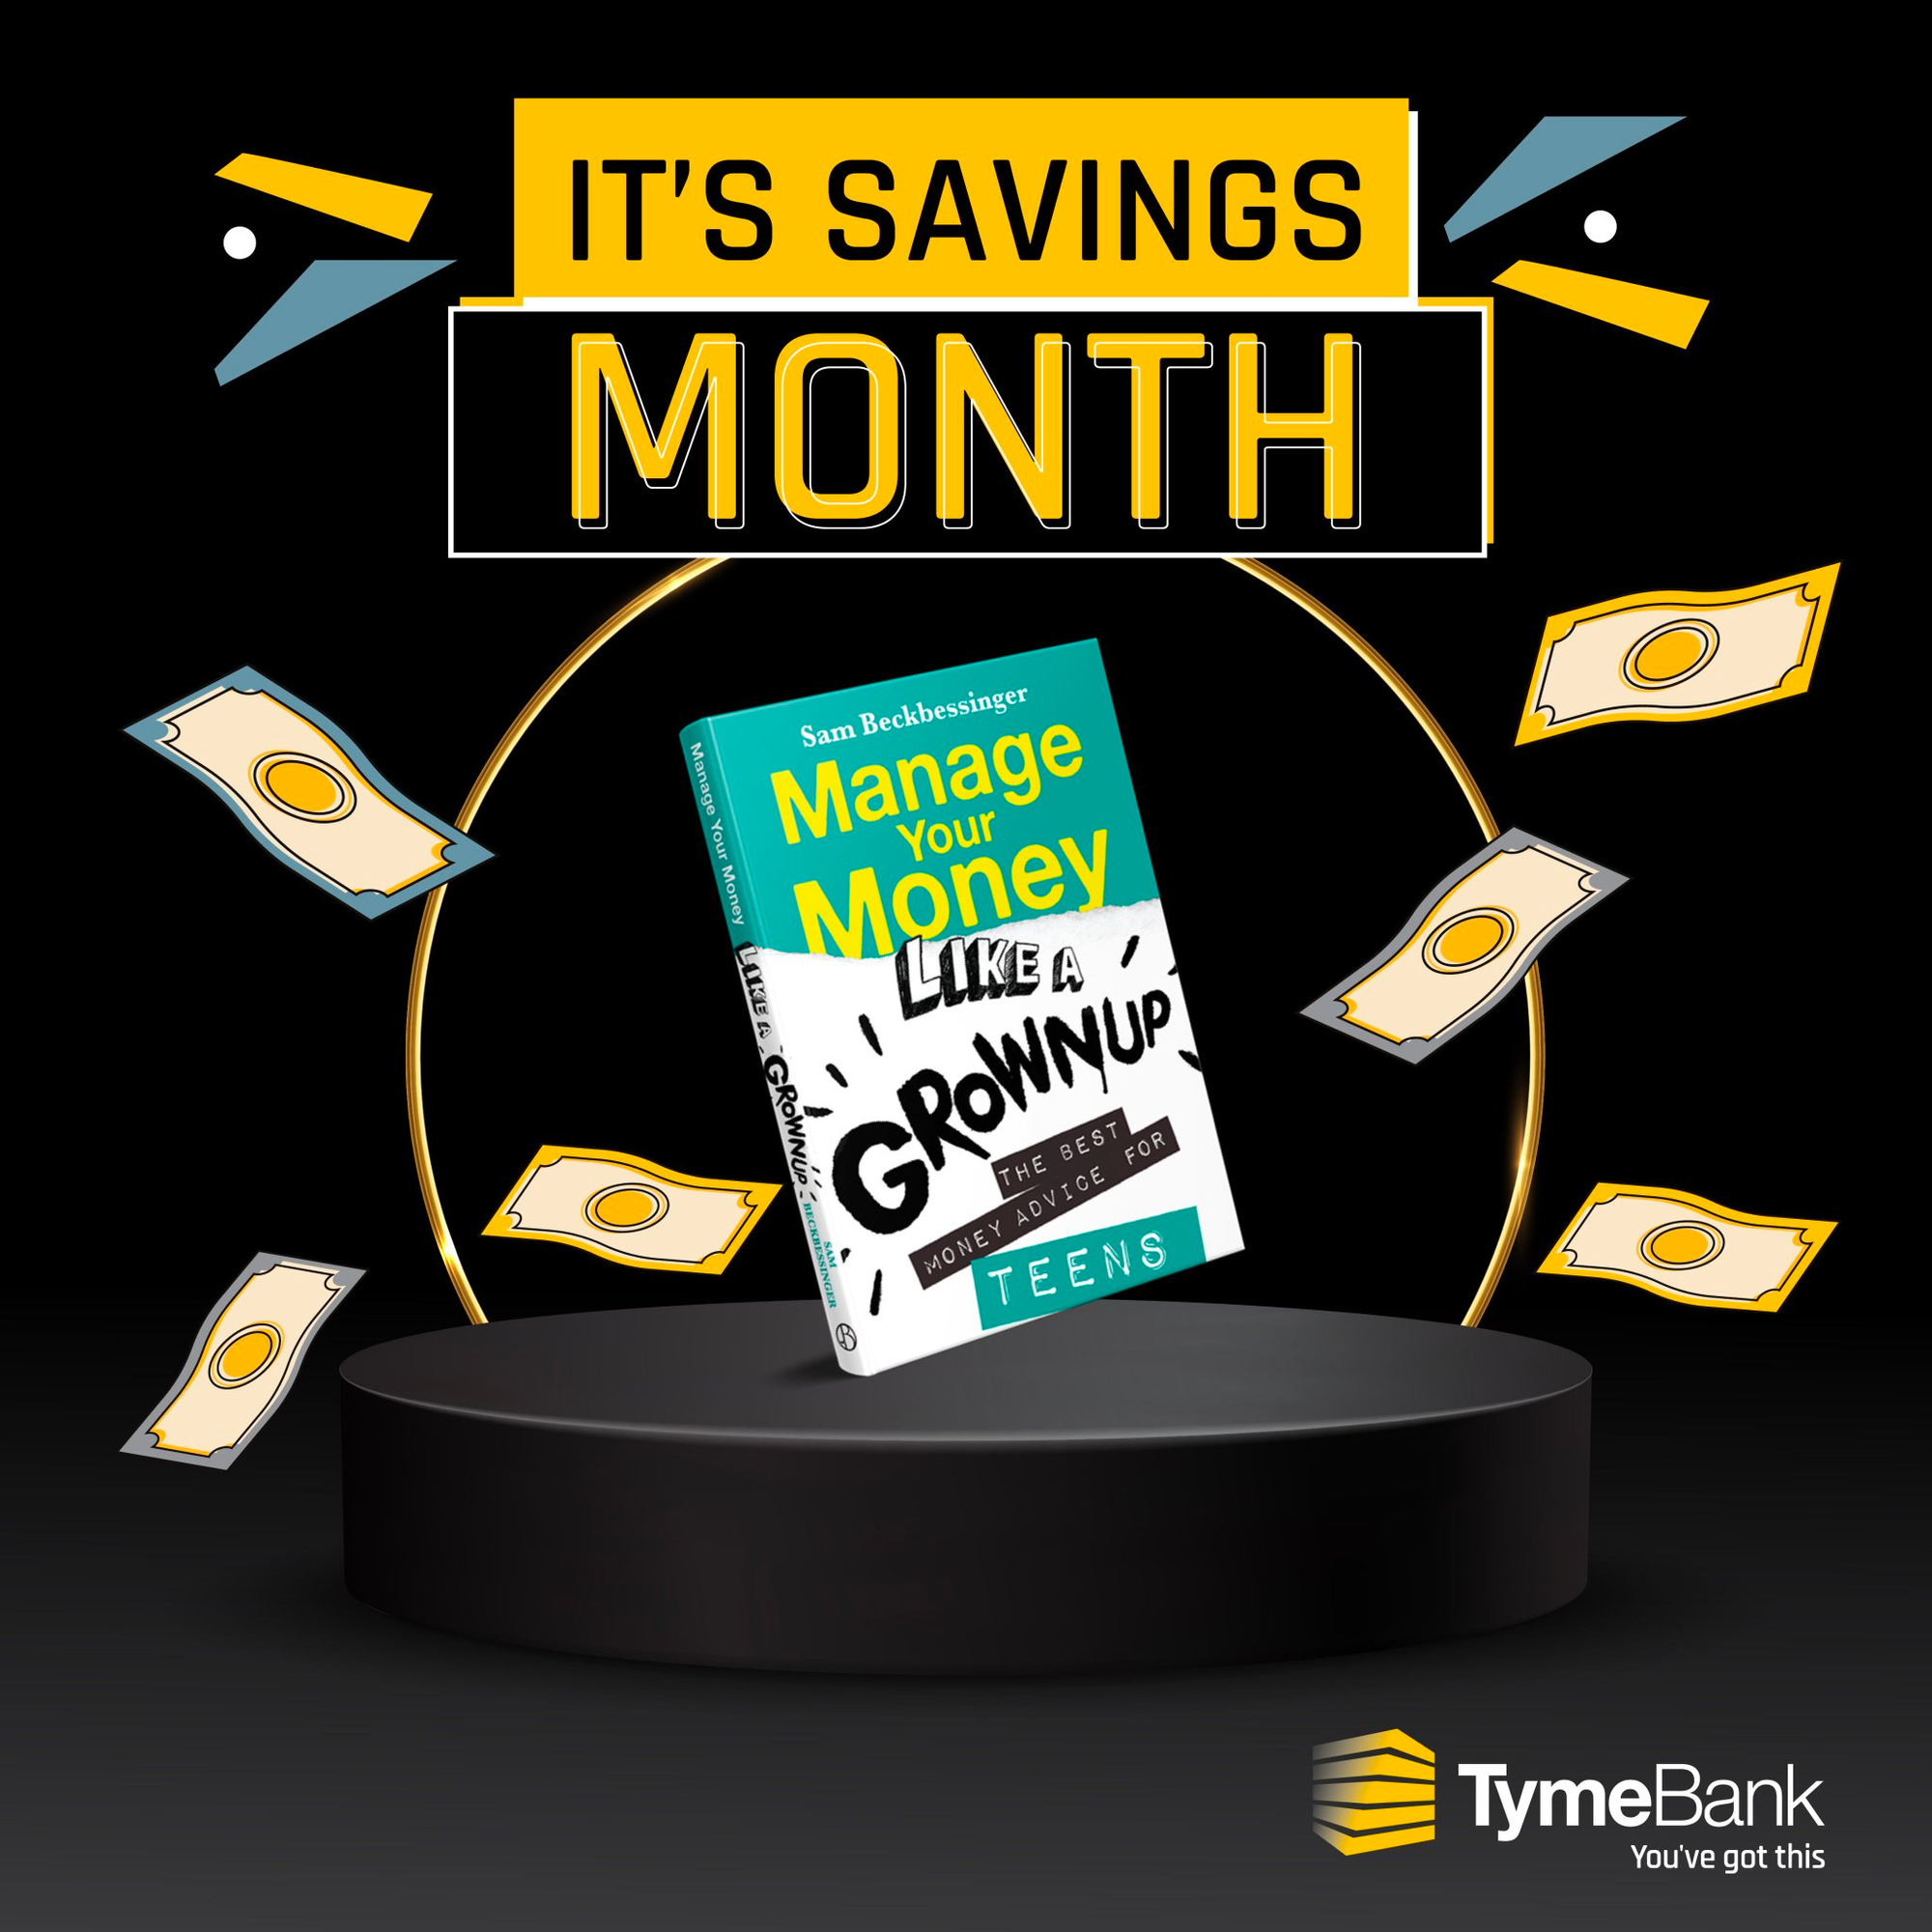 It's savings month with Tymebank